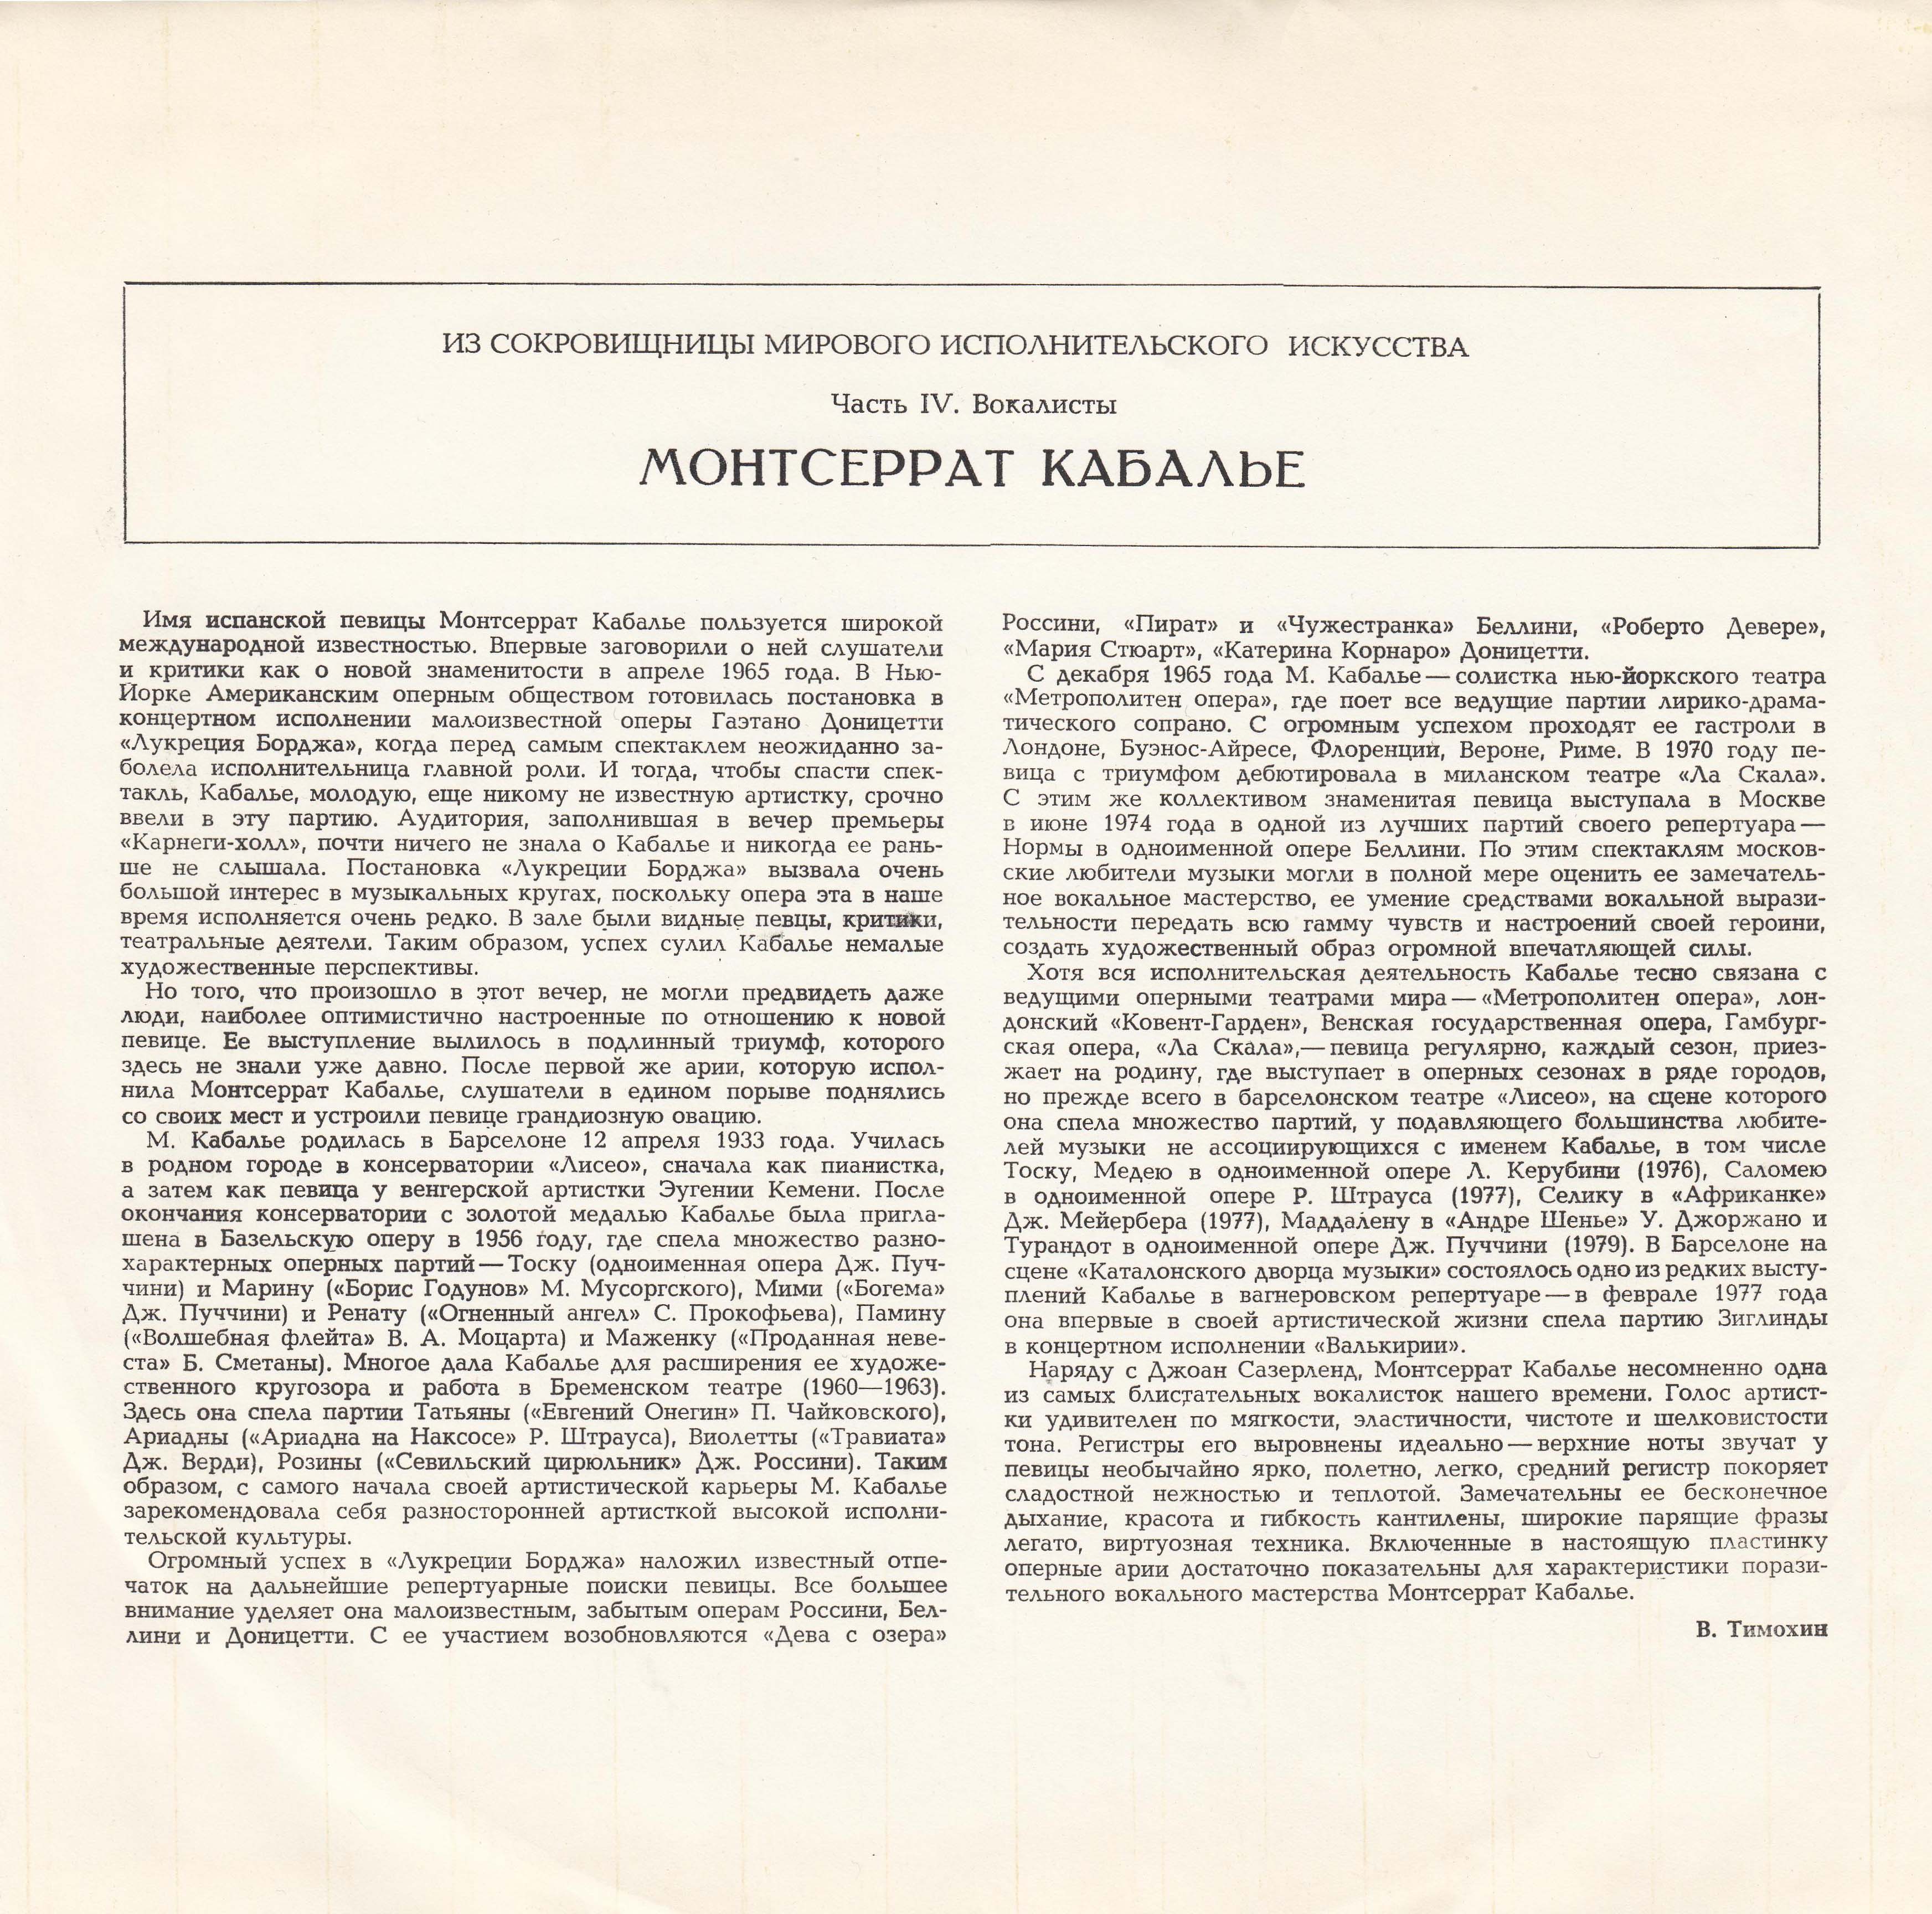 Монтсеррат Кабалье, сопрано / Montserrat Caballé ‎– Soprano